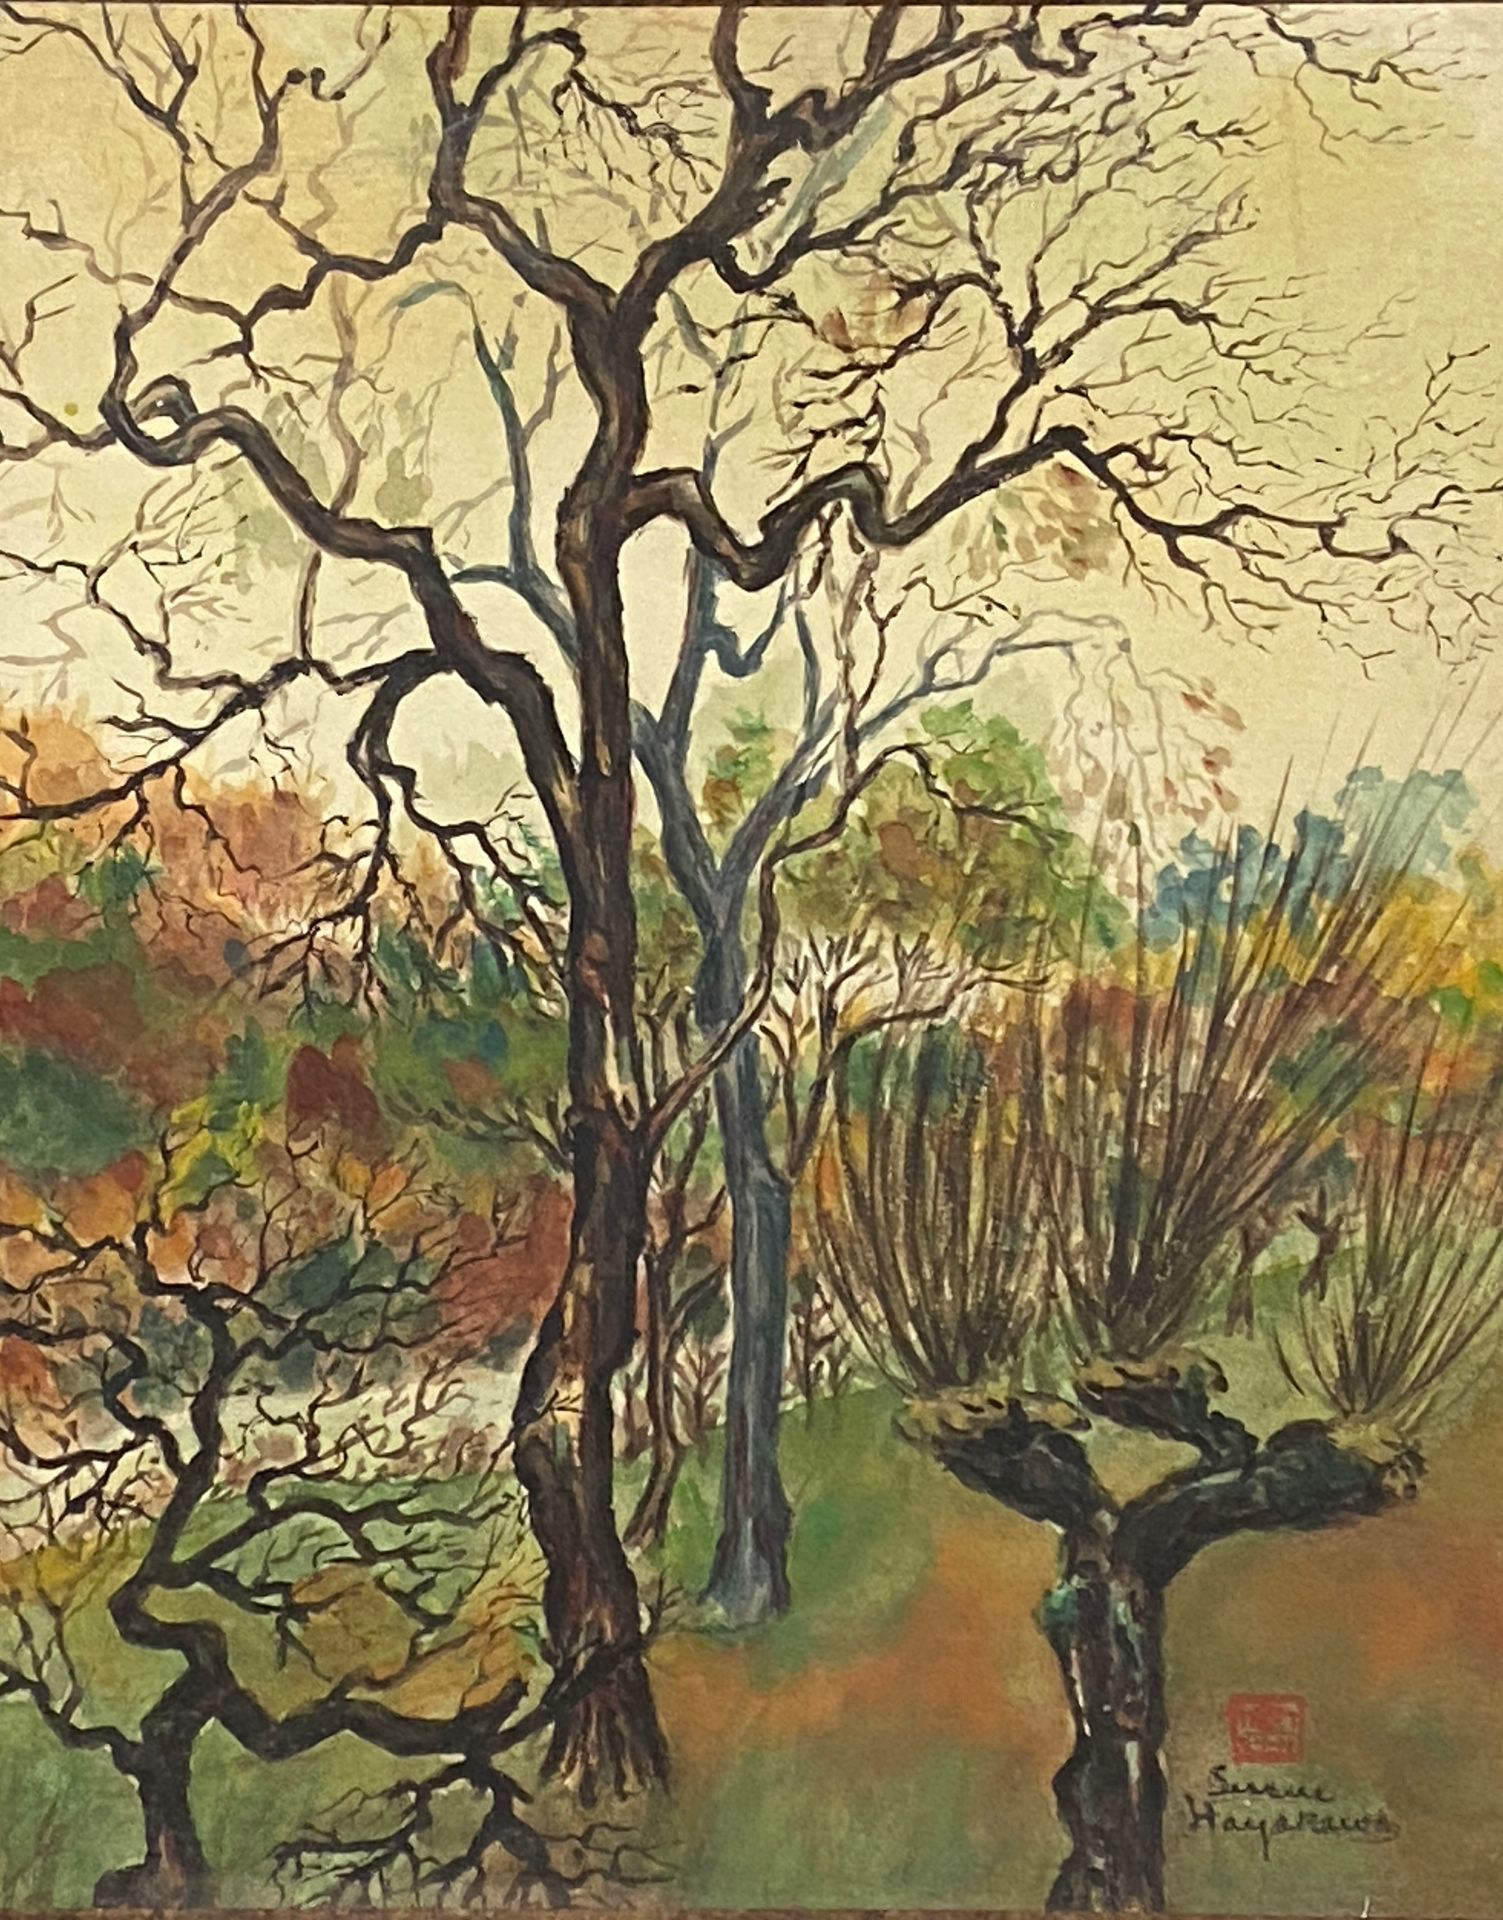 Null 20世纪的东方教育

水彩画表现冬天的树木景观。右下角有标记和签名 "Sessue Mayakawa"。